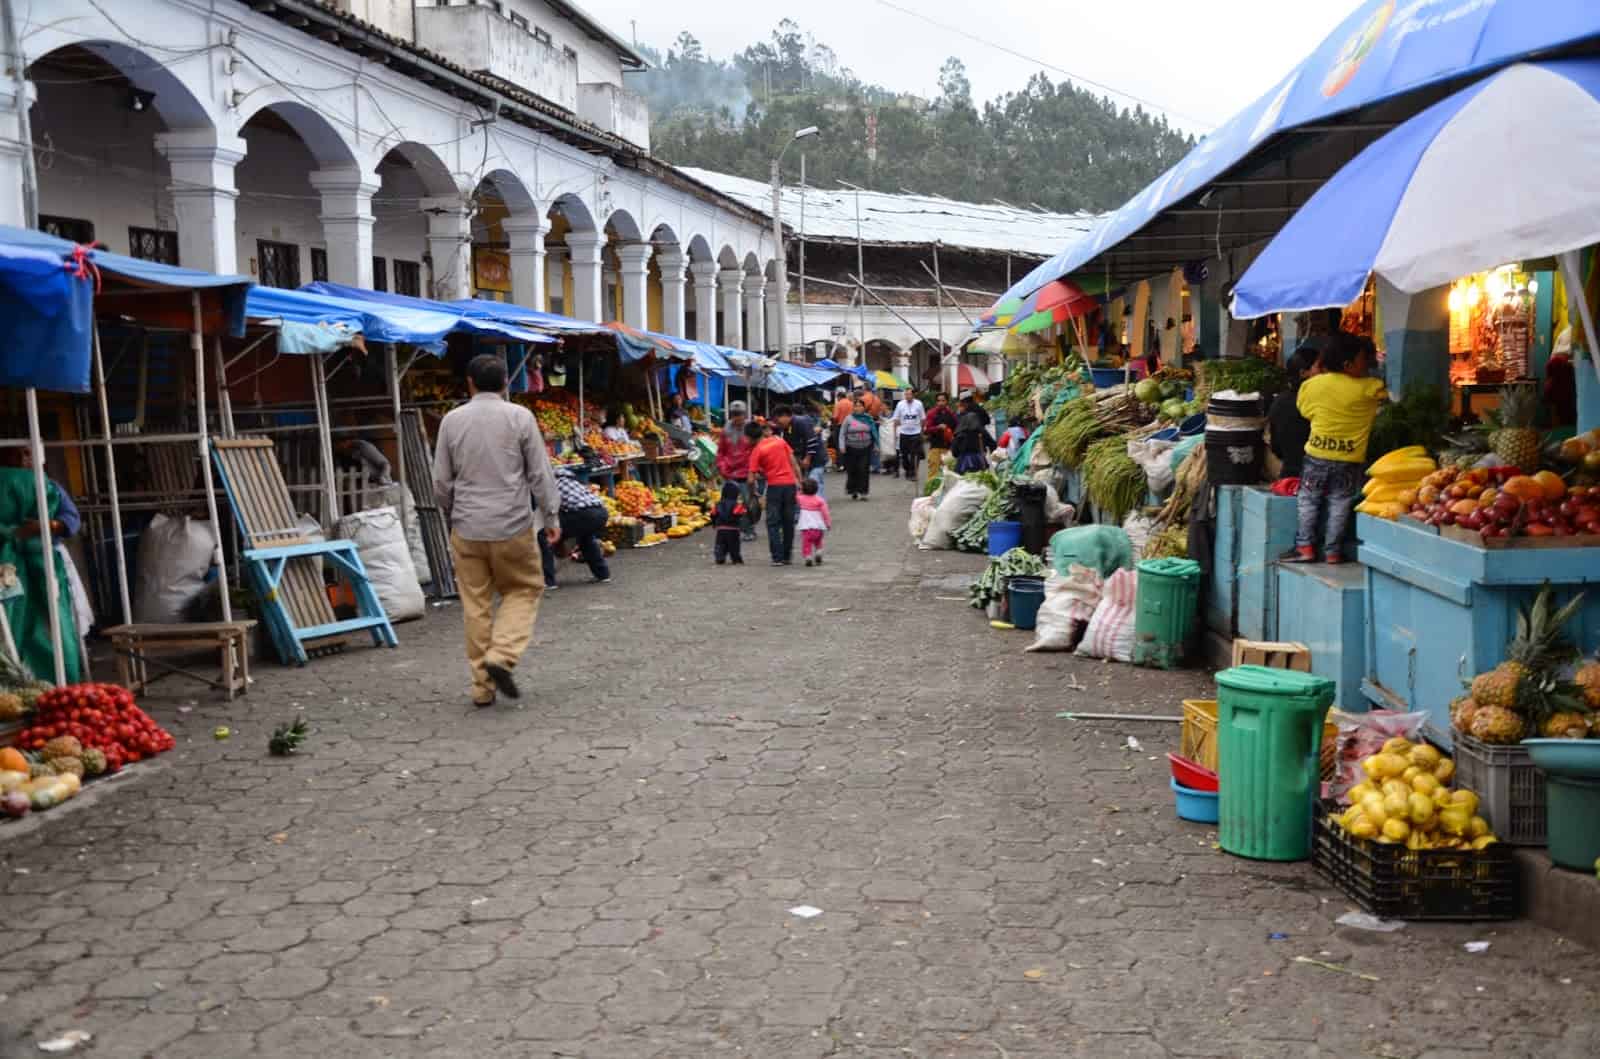 Daily market in Otavalo, Ecuador